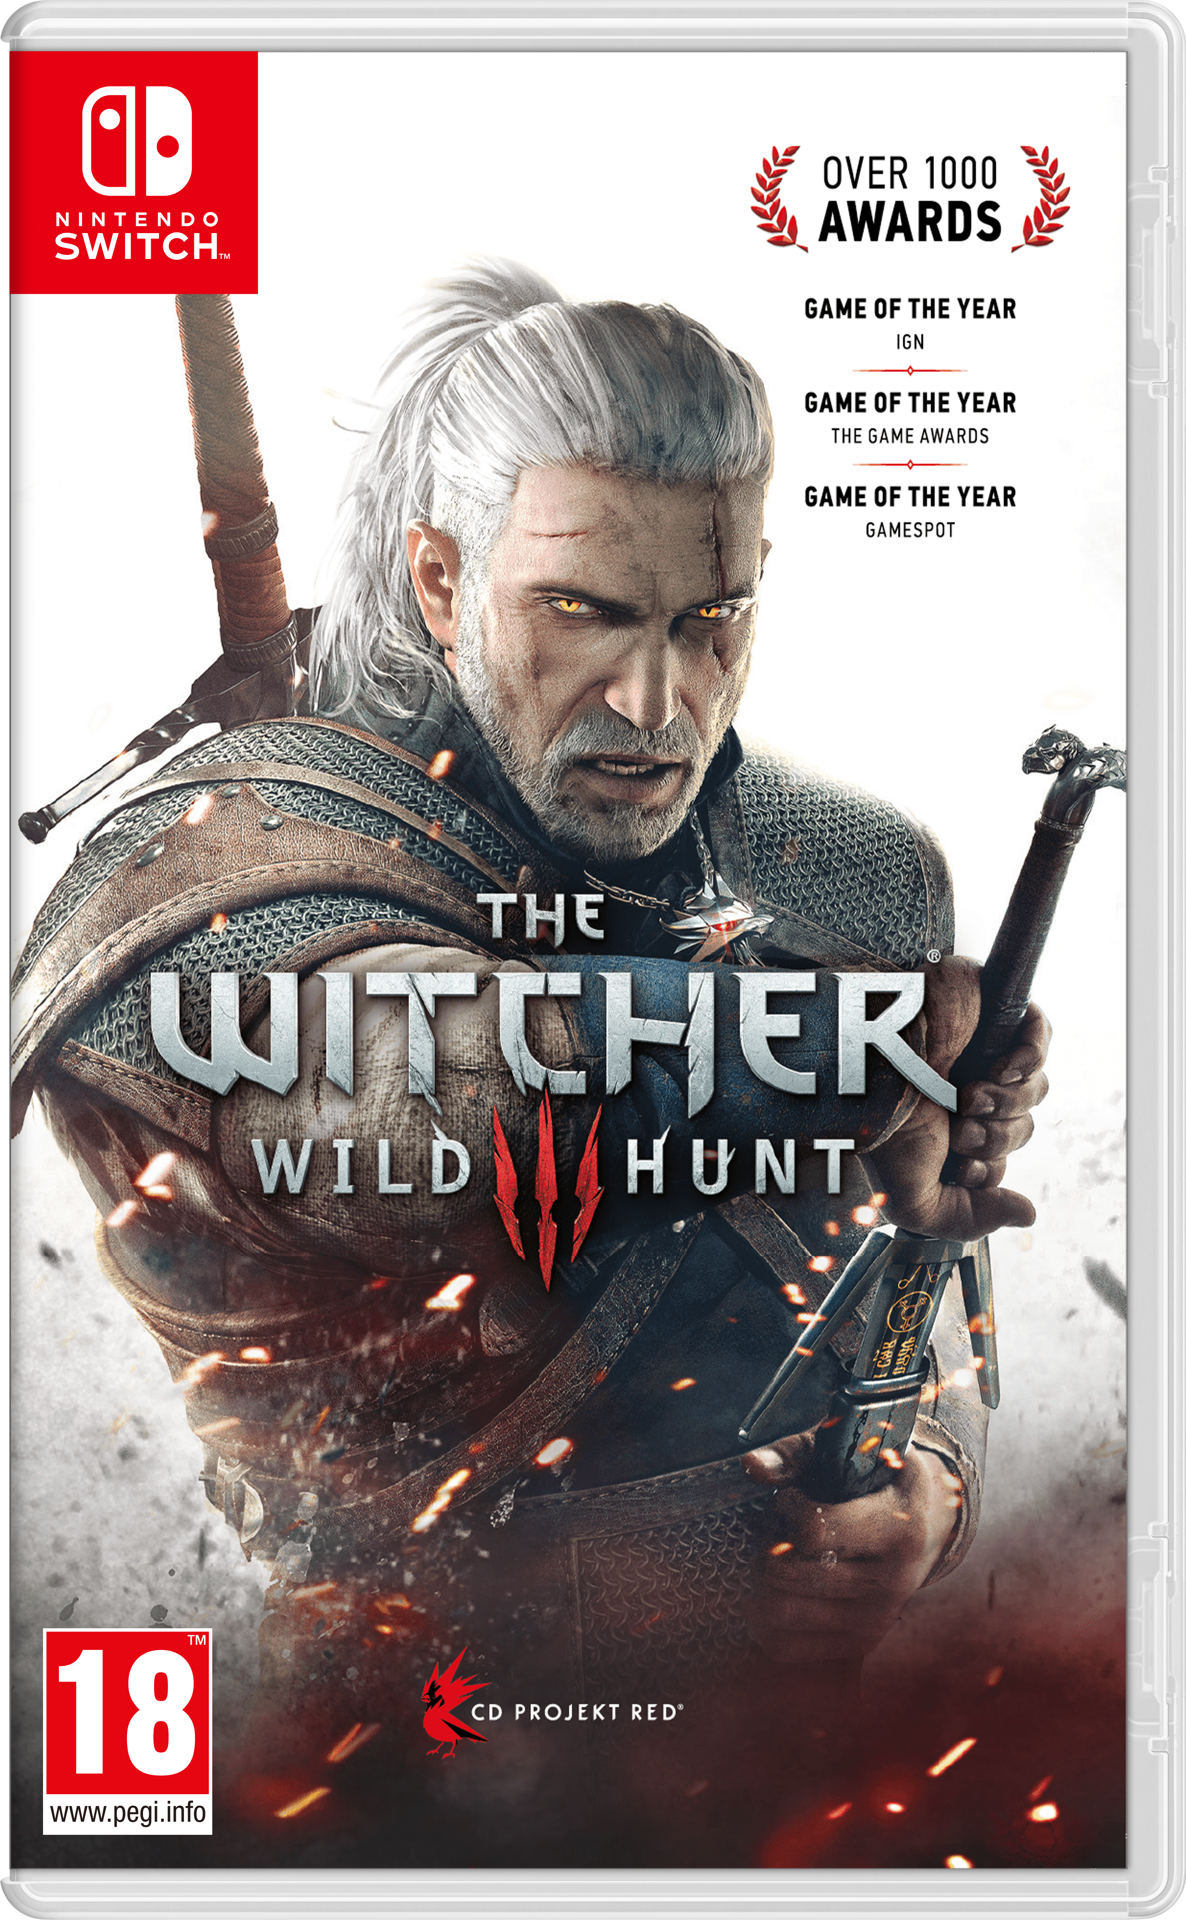 The Witcher 3 : Wild Hunt - Vanilla Light Edition